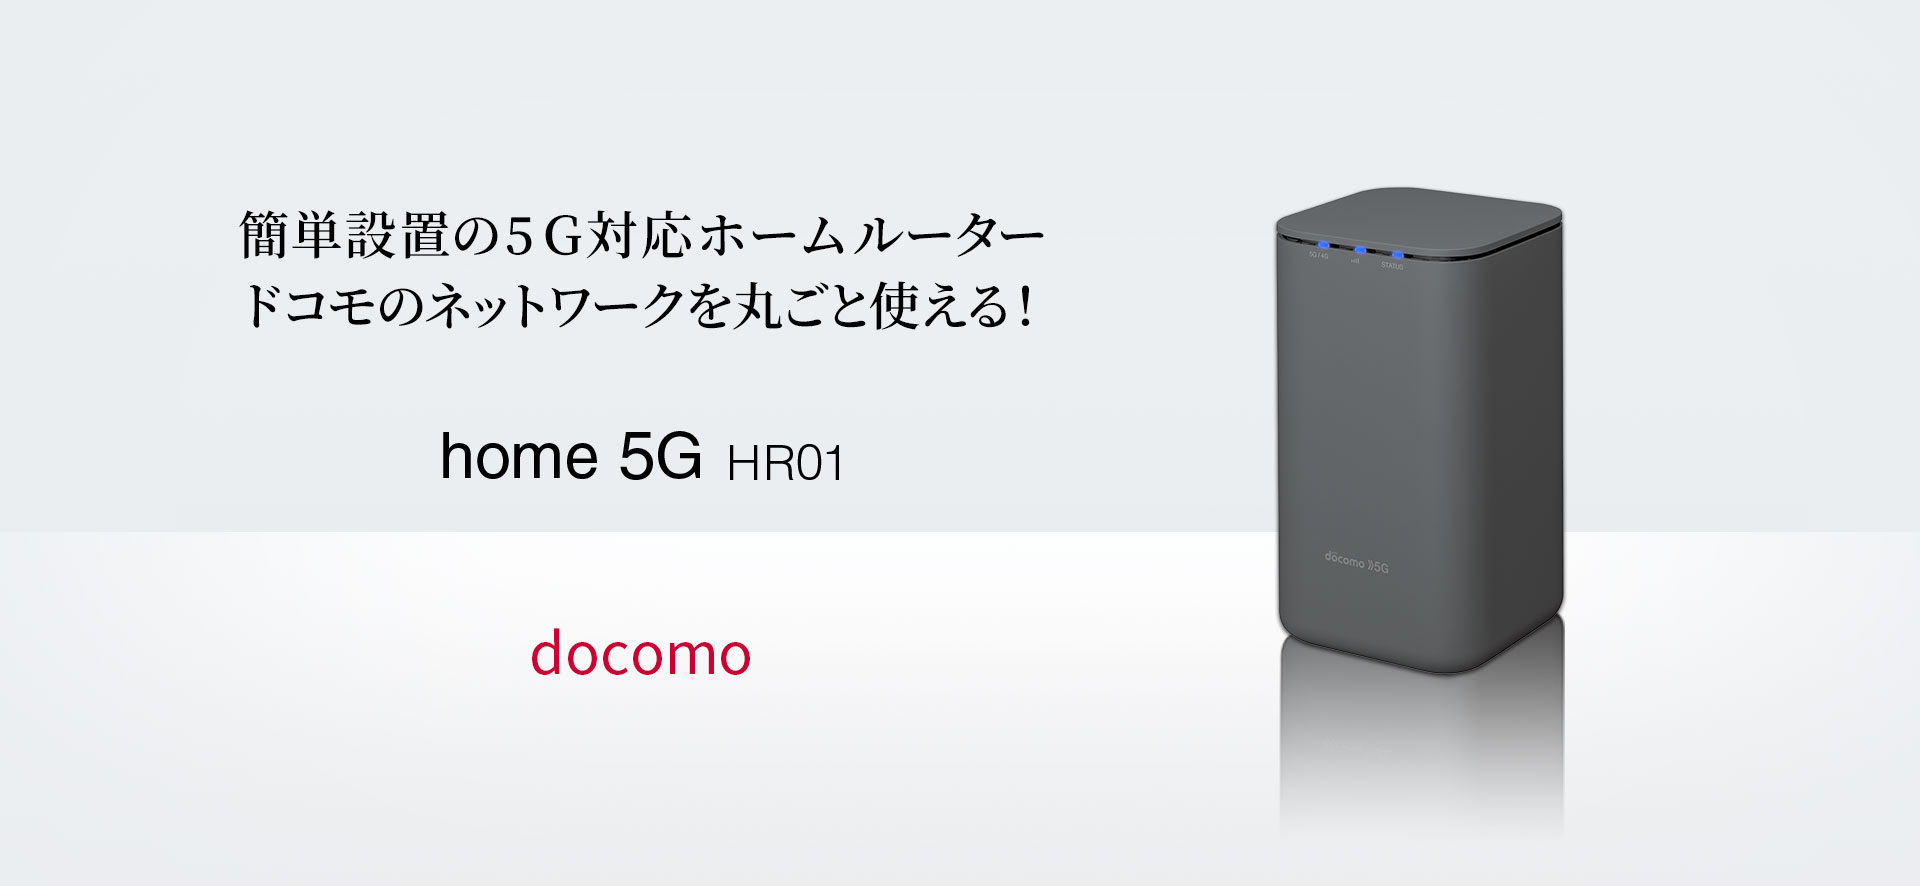 NTTドコモ home 5G HR01 SHARP製 docomo